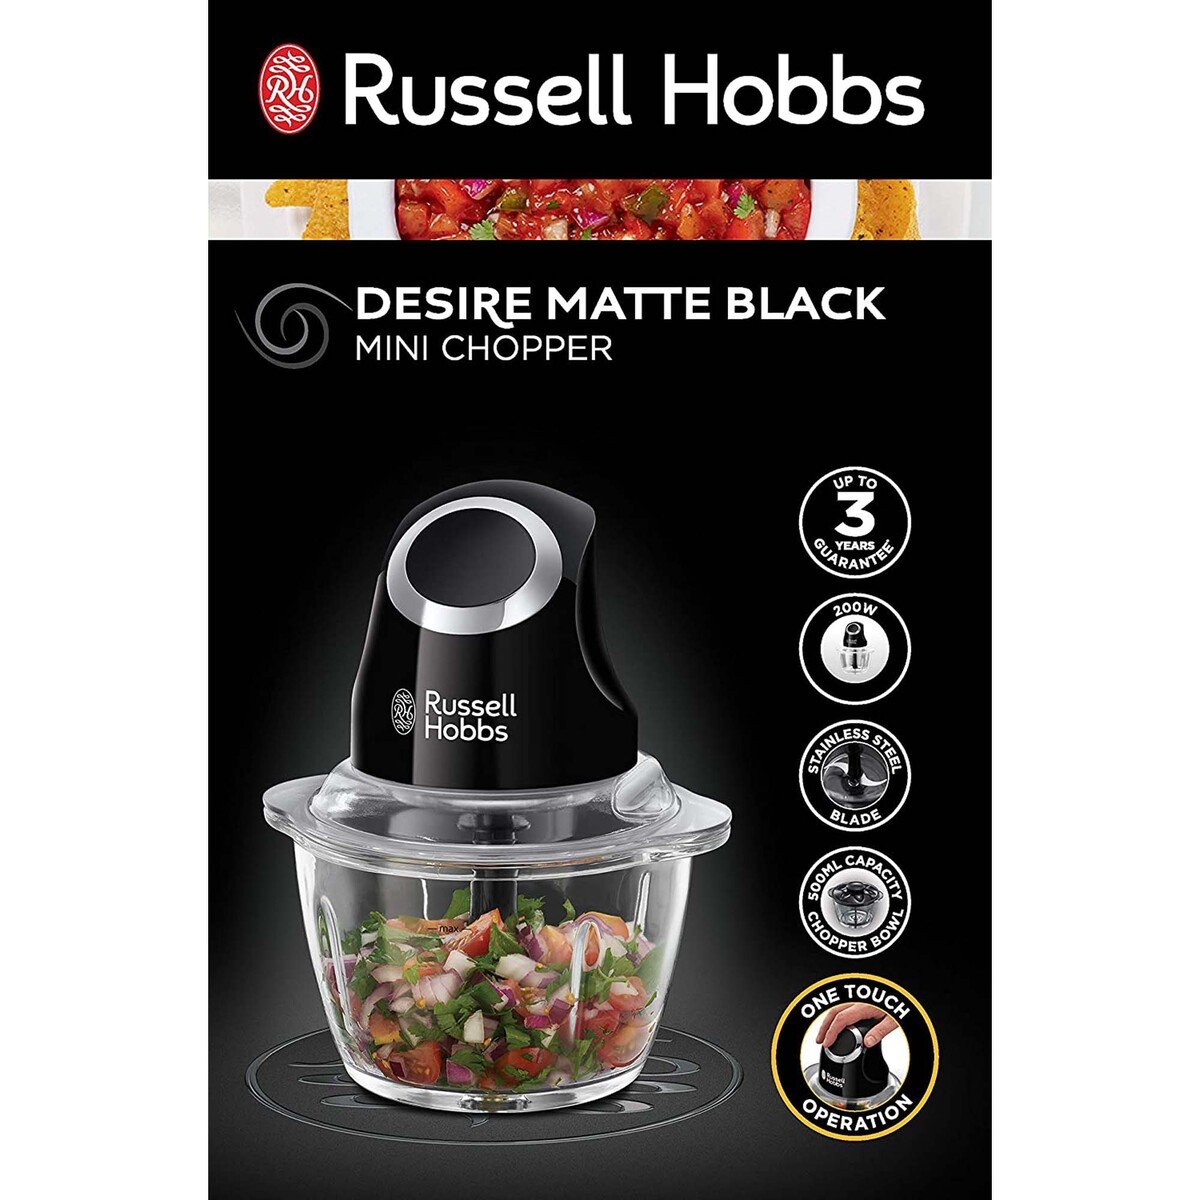 Russell Hobbs Desire Matte Black Mini Chopper 24662, Vegetable and Onion Chopper, 500ml Capacity Glass Bowl, Matte Black, 200W